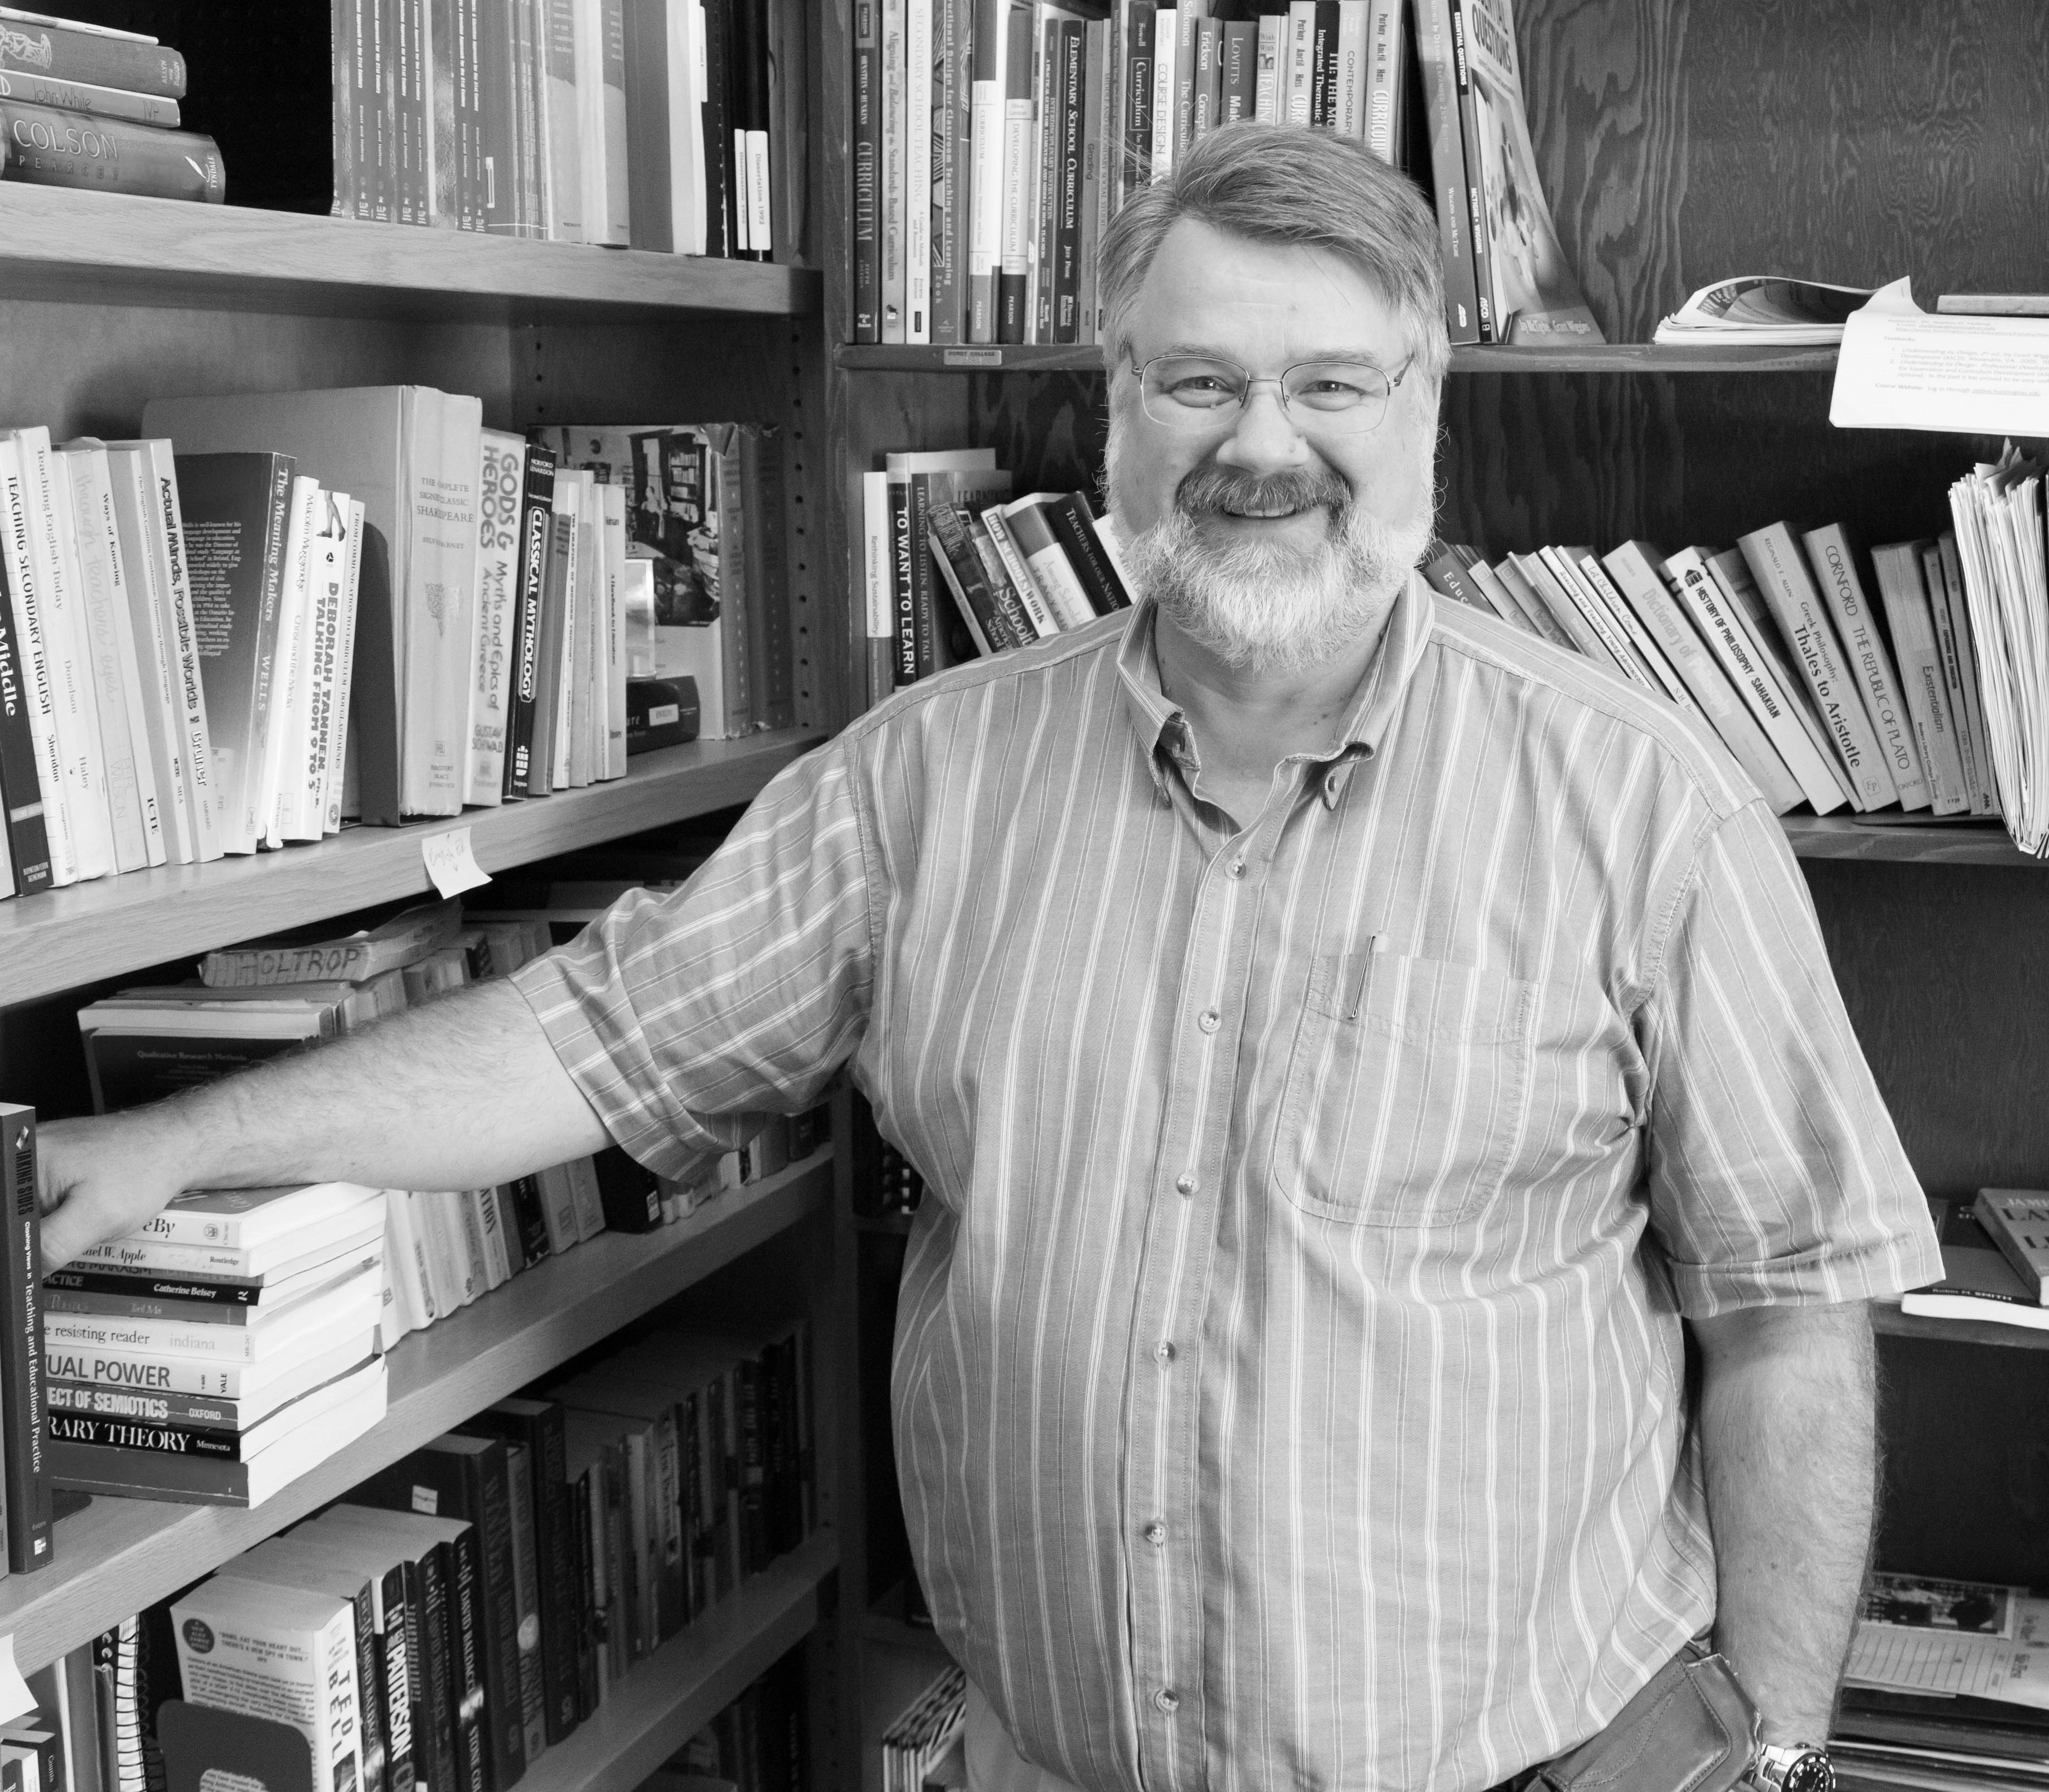 Black and white photo of bearded man standing in corner of room amidst bookshelves